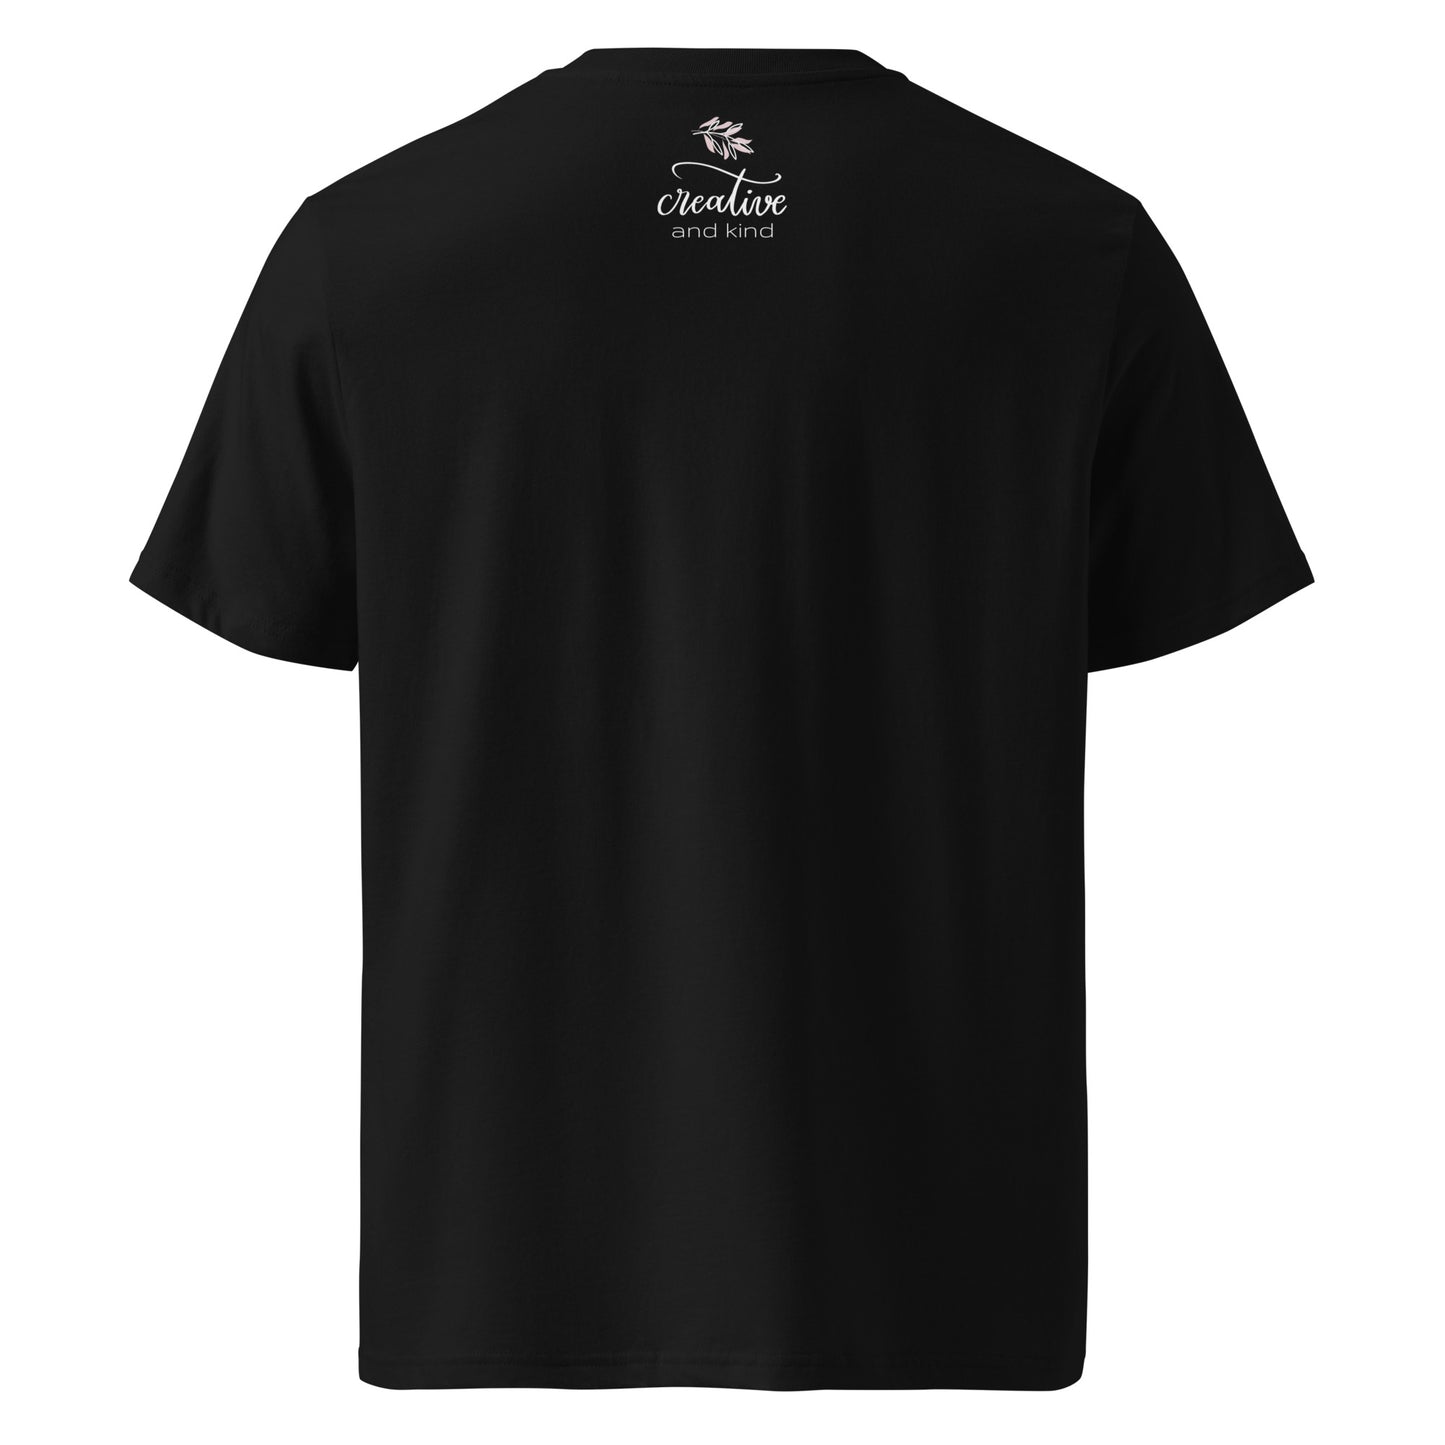 Unisex organic cotton t-shirt "Bad vibes"